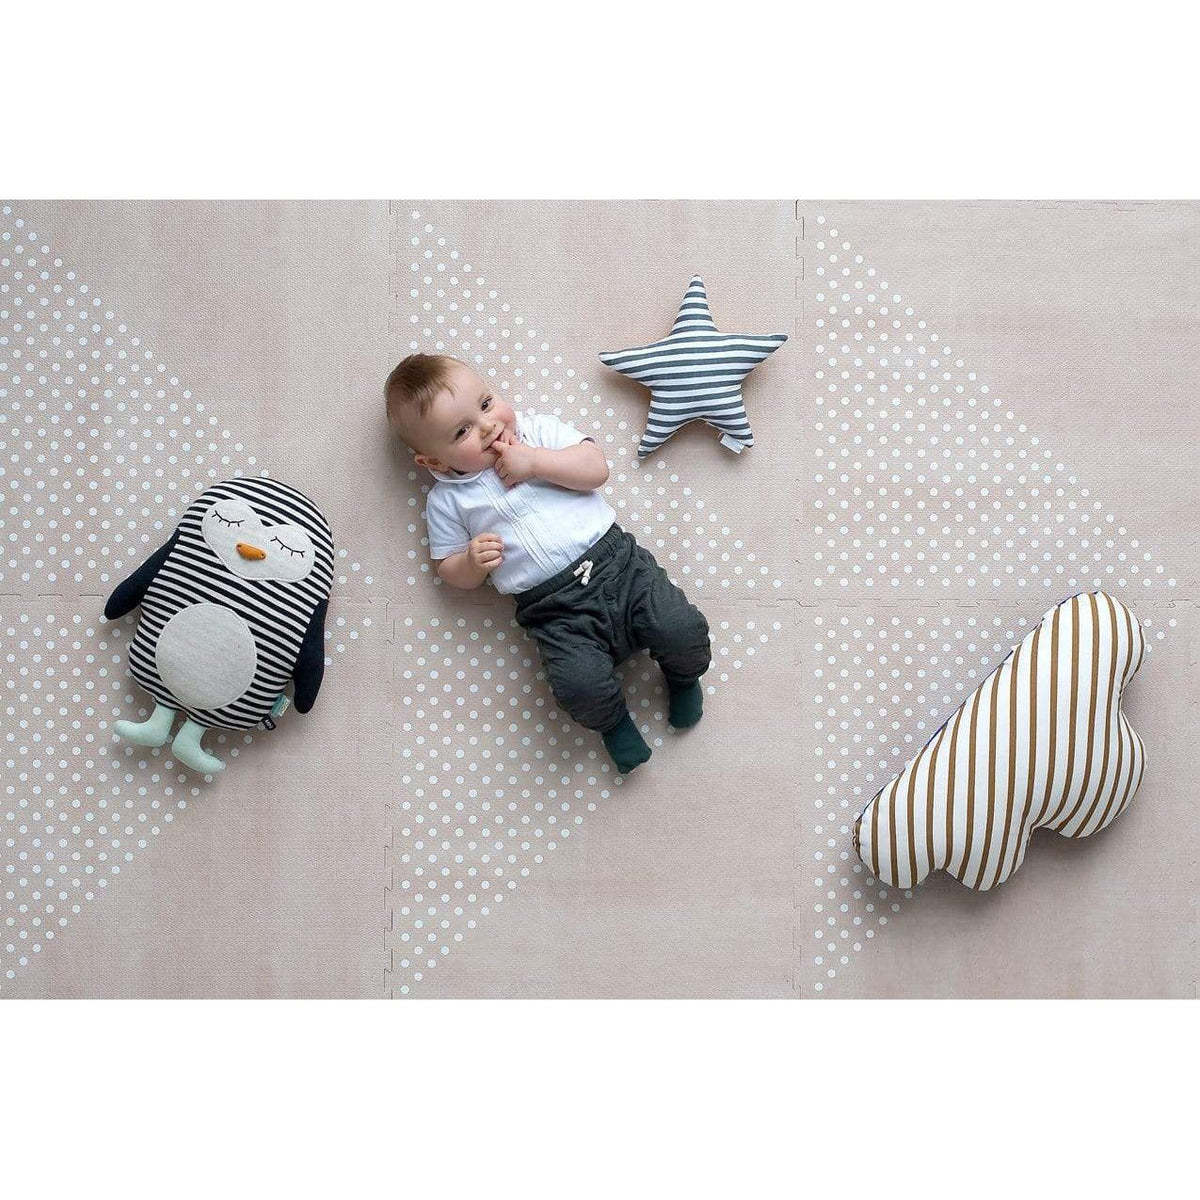 toddlekind-prettier-playmat-earth-clay-120x180cm-6-tiles-&amp;-12-edging-borders- (8)